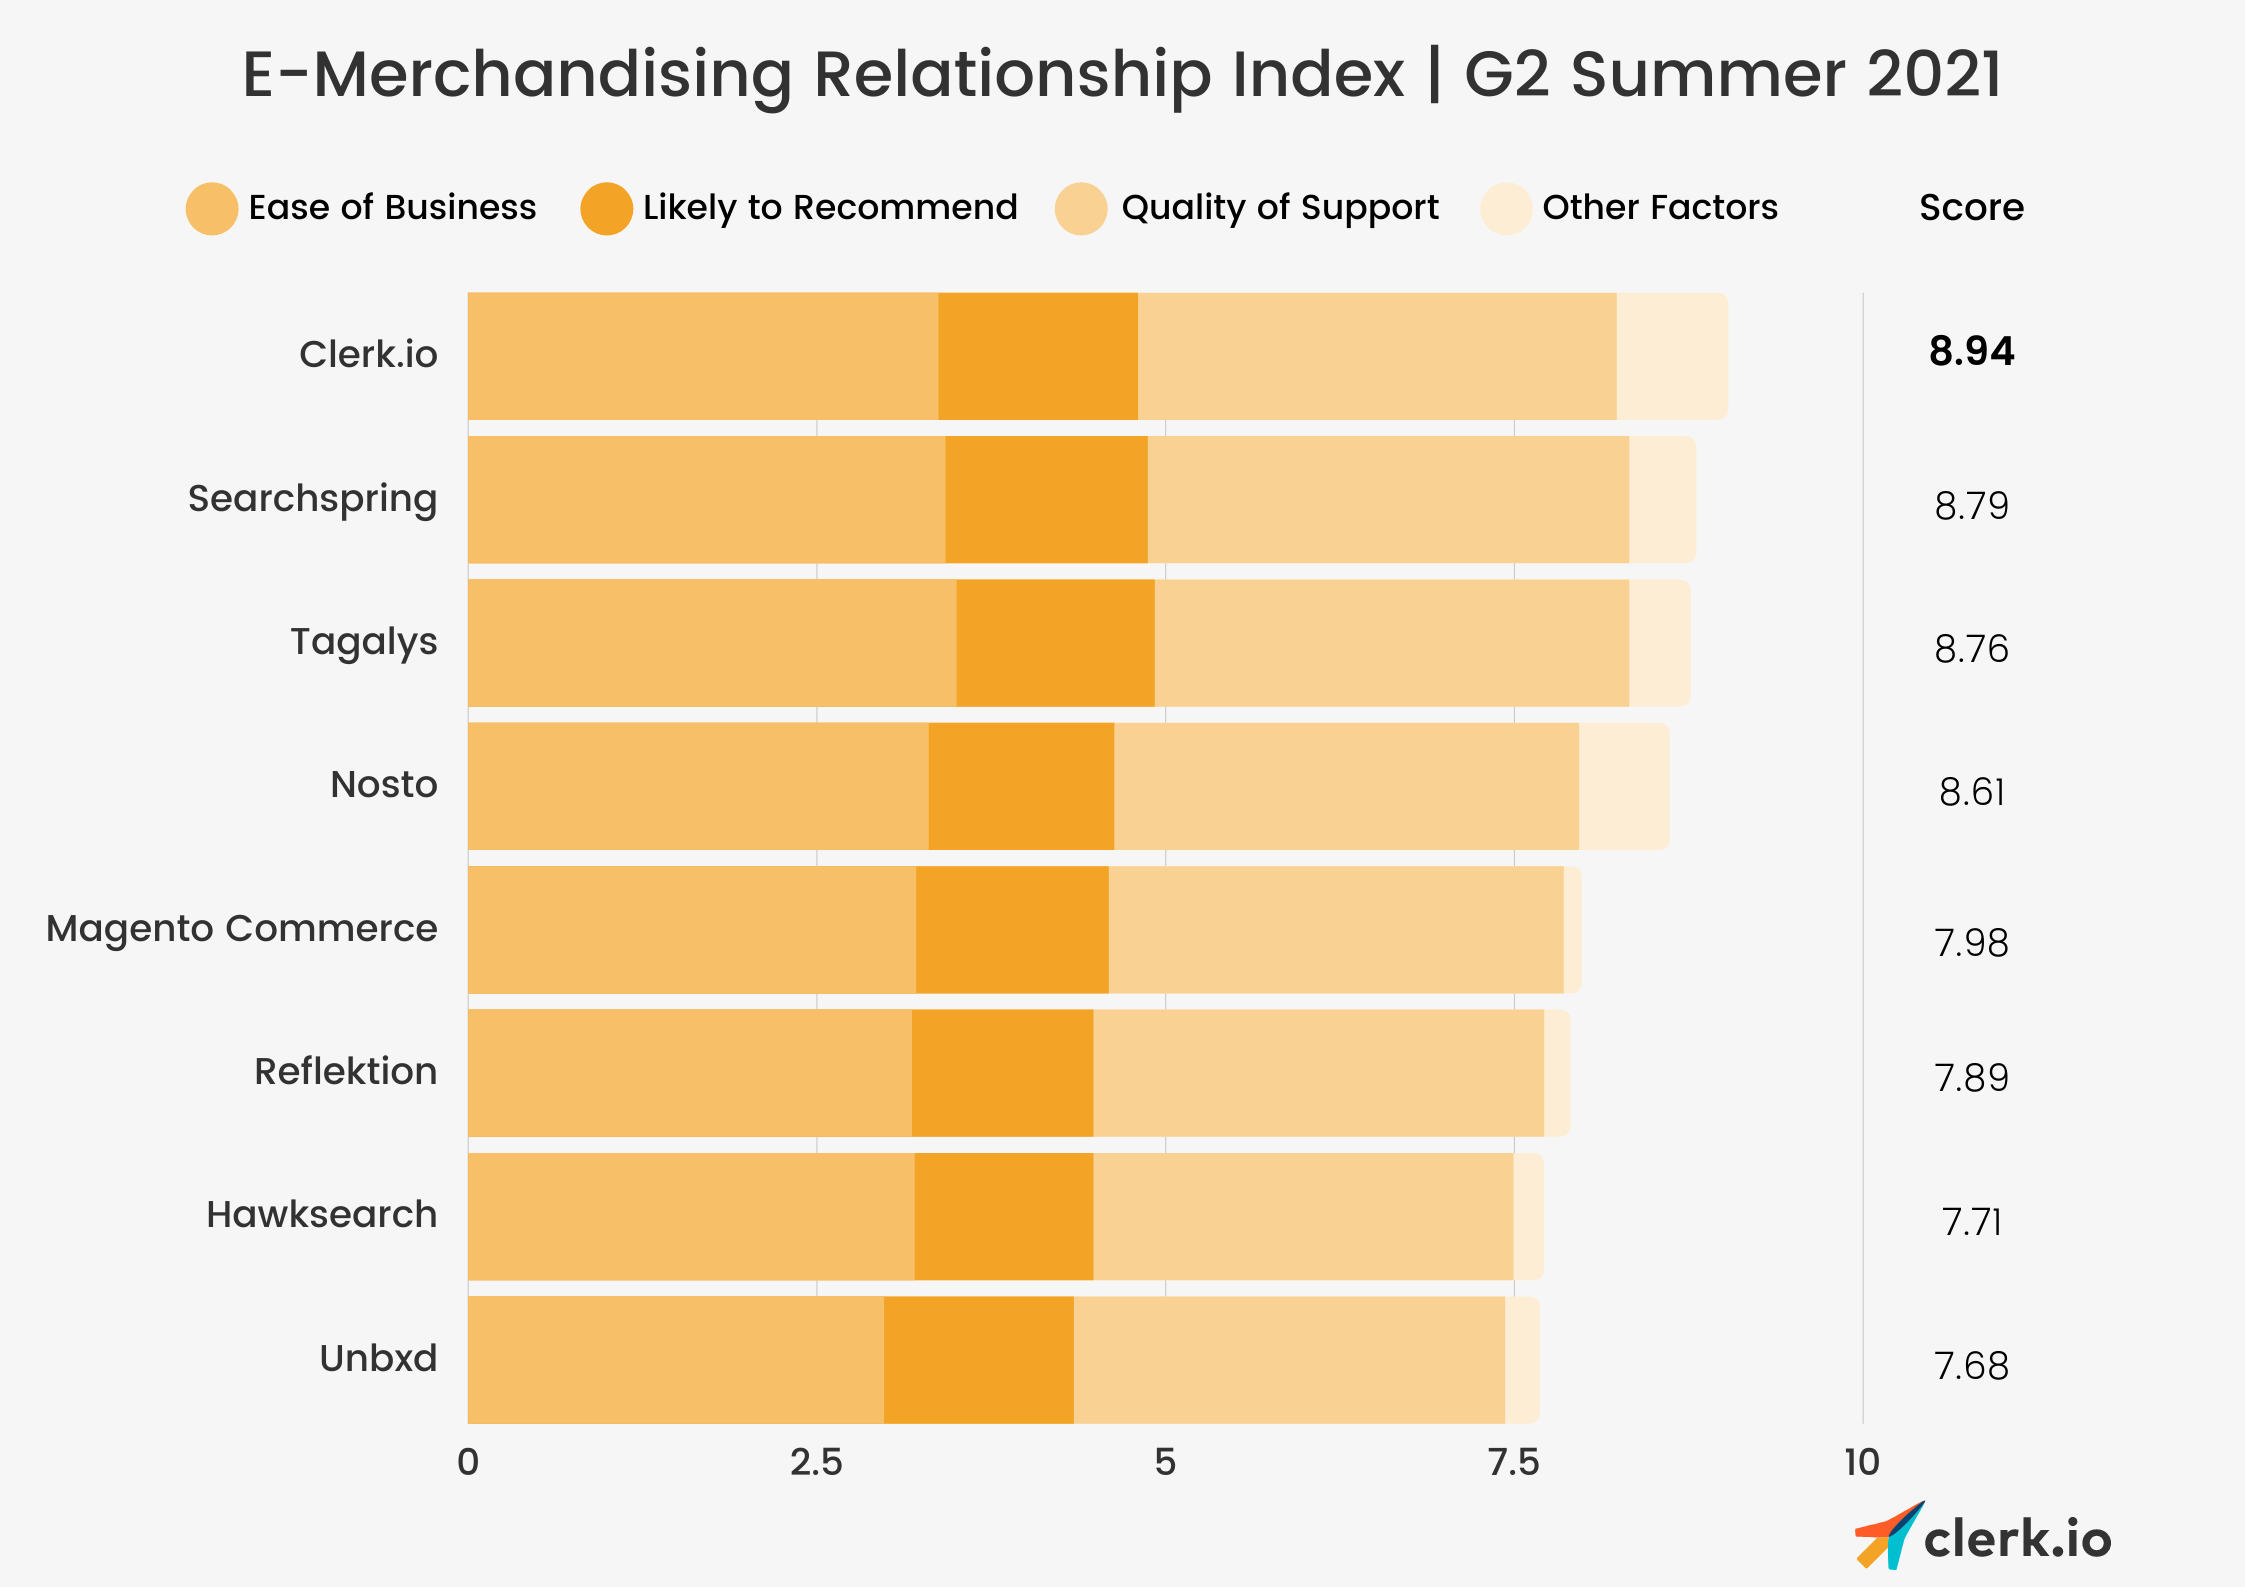 G2 relationship index for mechandising summer 2021